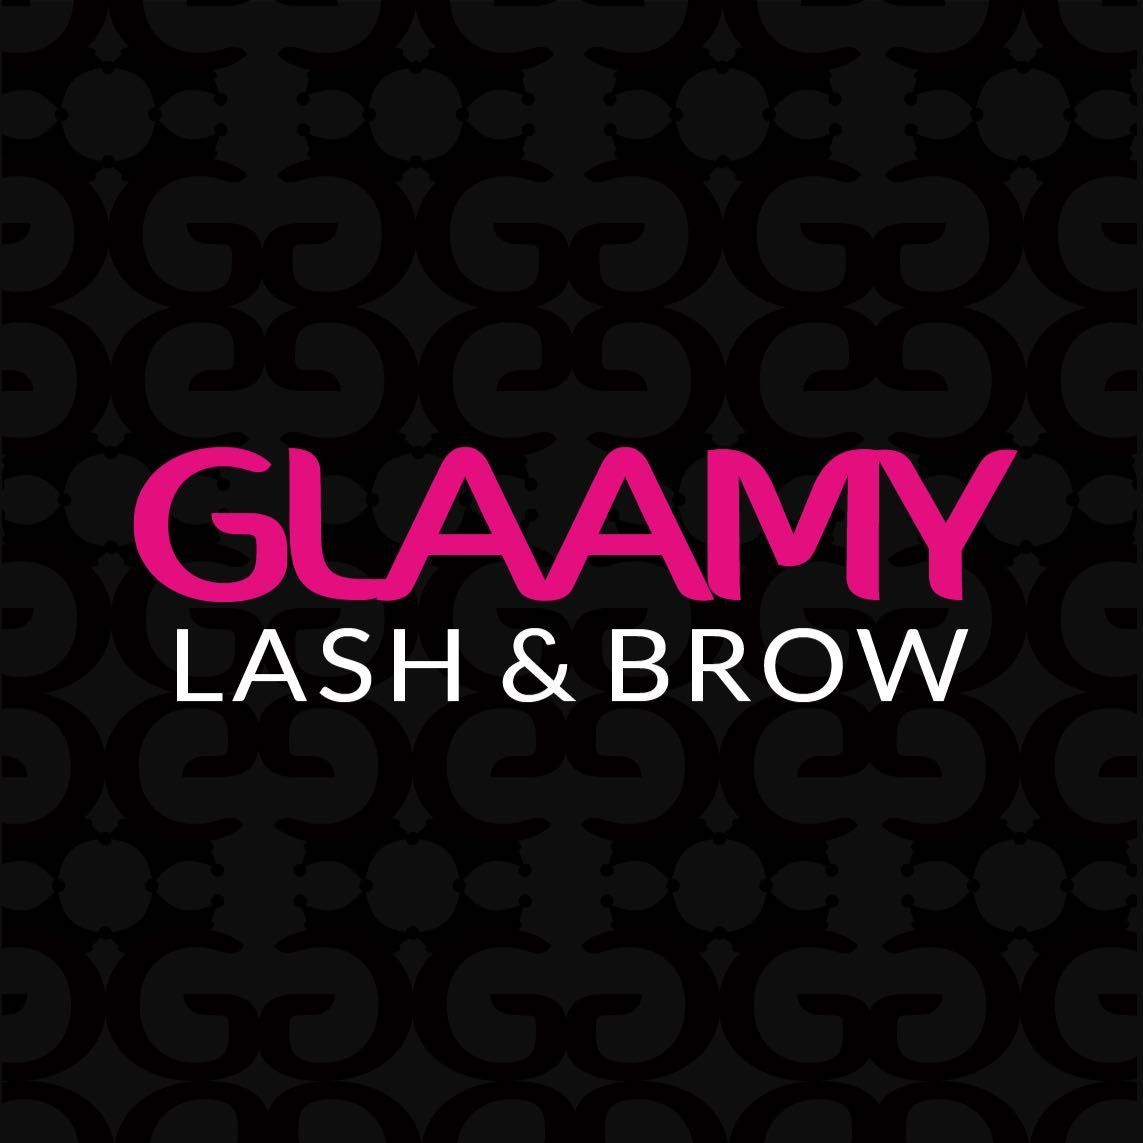 Glaamy Lash & Brow, 9521 S, S Orange Blossom Trl suite 112, Orlando, 32837